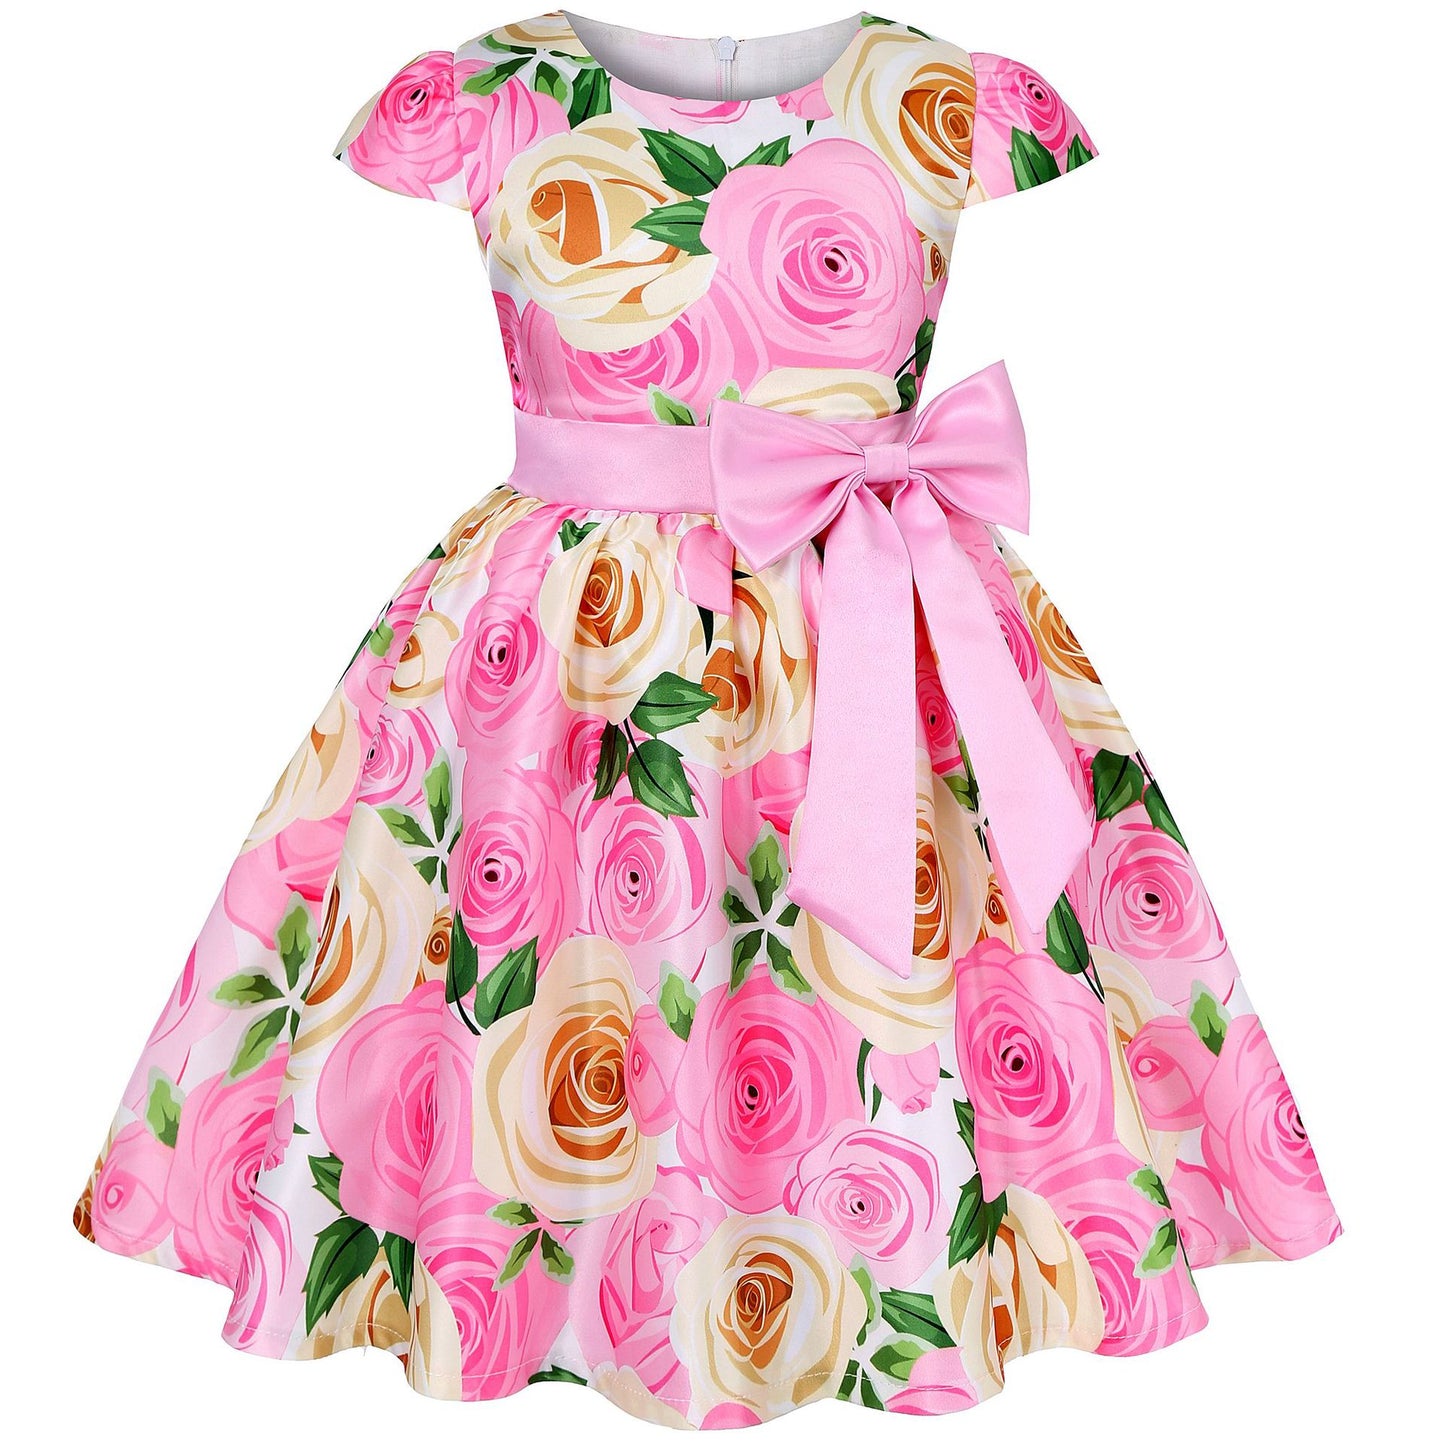 Flower Elegant Causal Princess Party Dresses Children Clothing